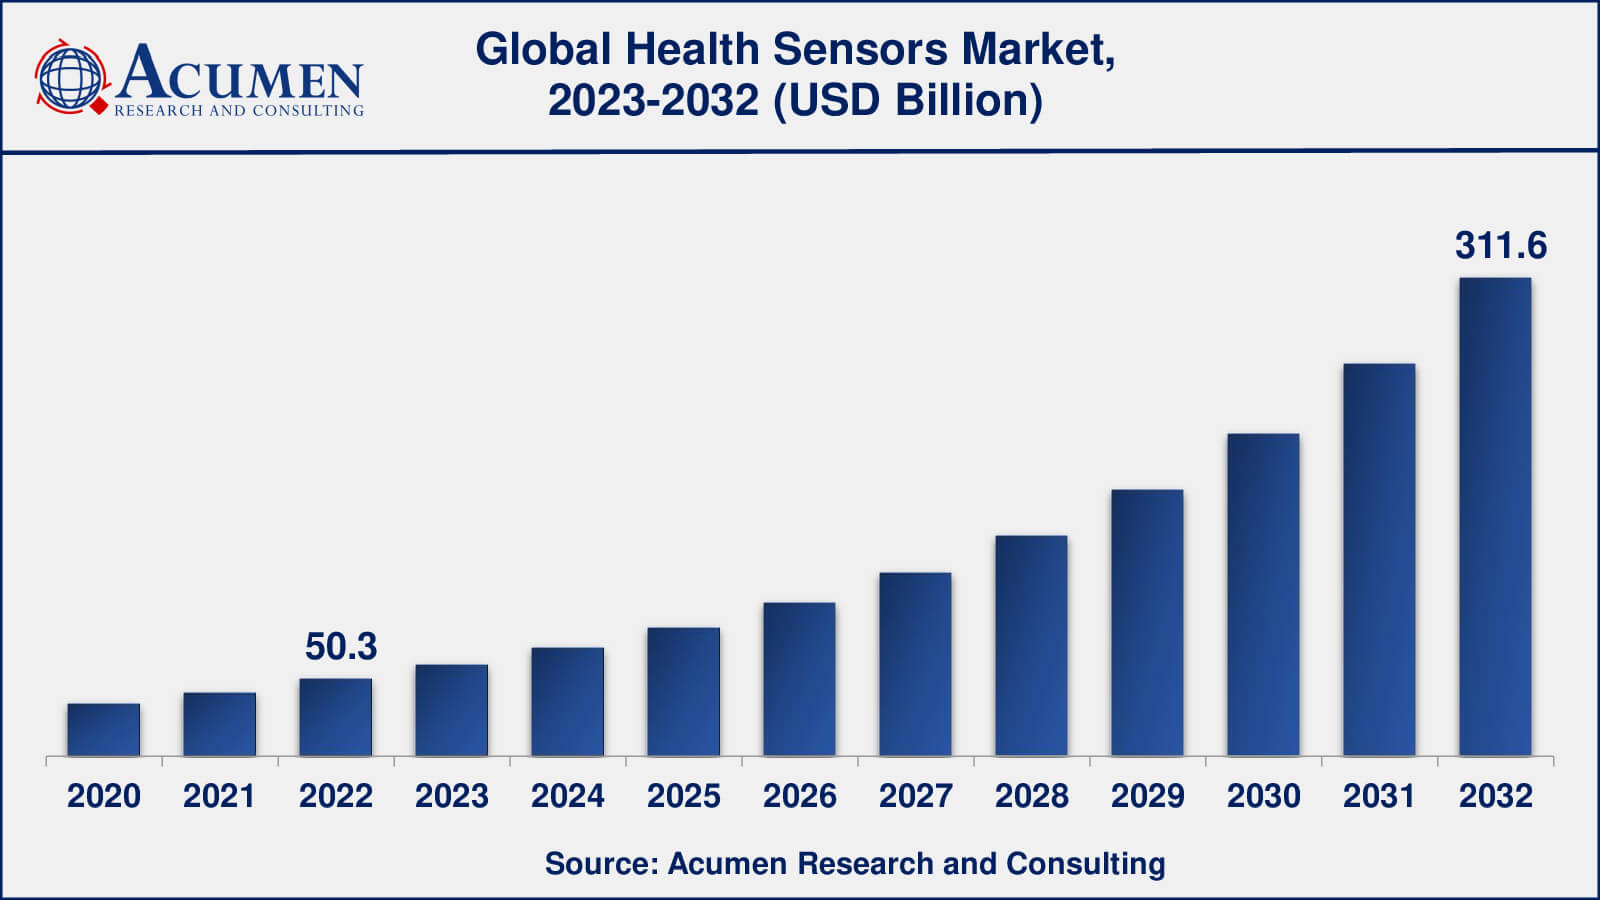 Health Sensors Market Analysis Period